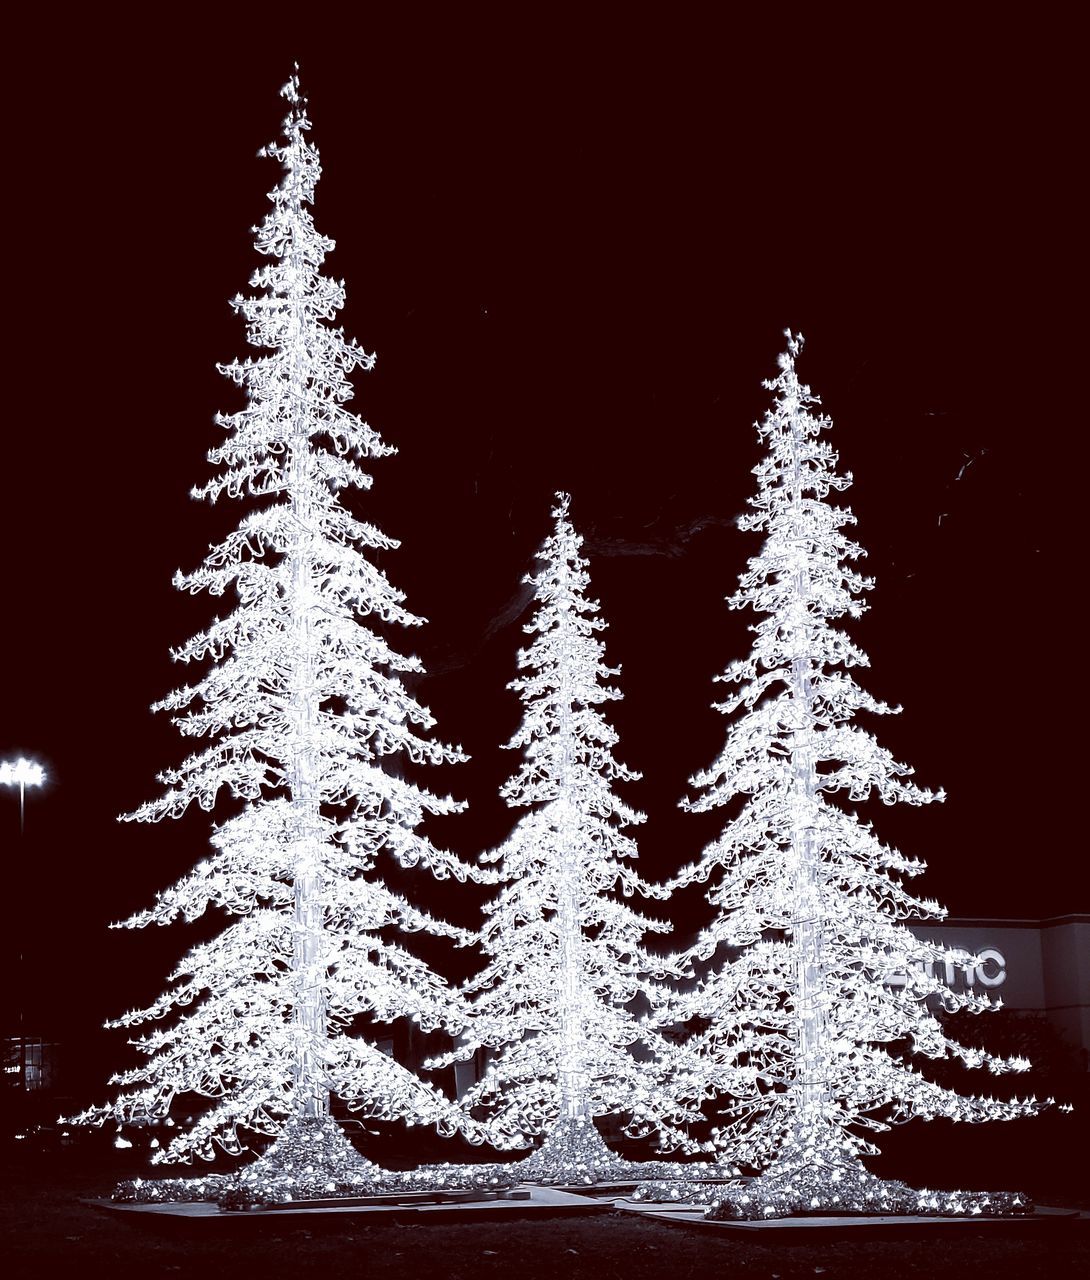 ILLUMINATED CHRISTMAS TREE IN SNOW